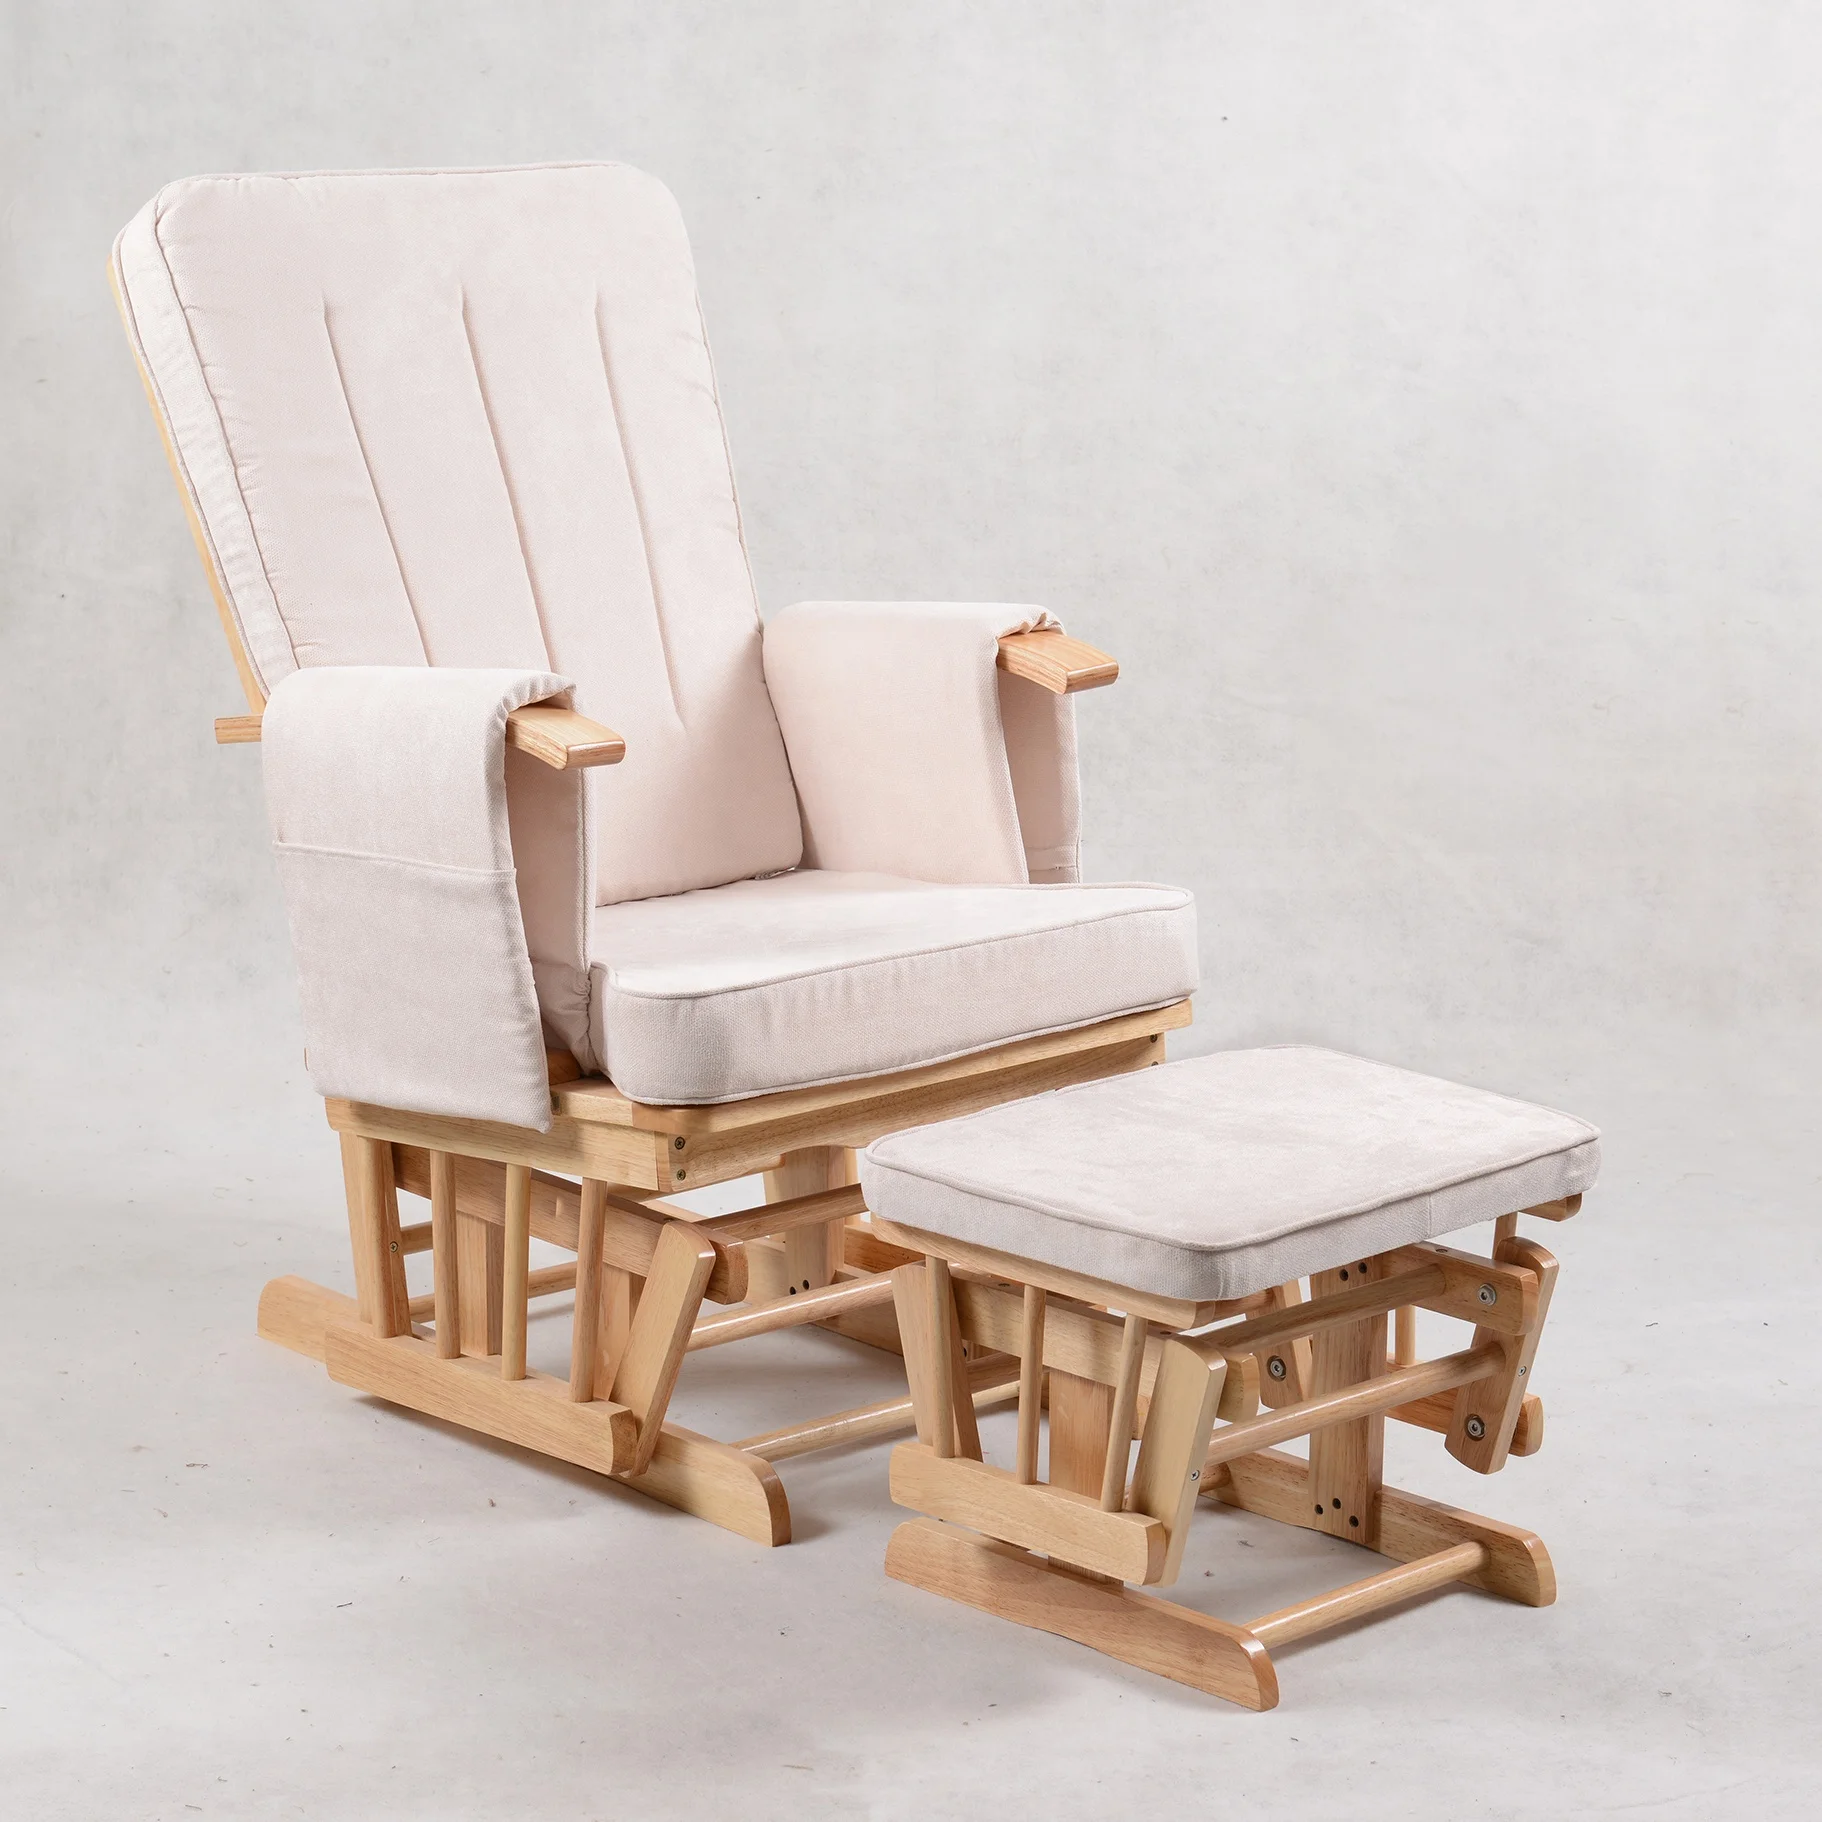 buy glider chair